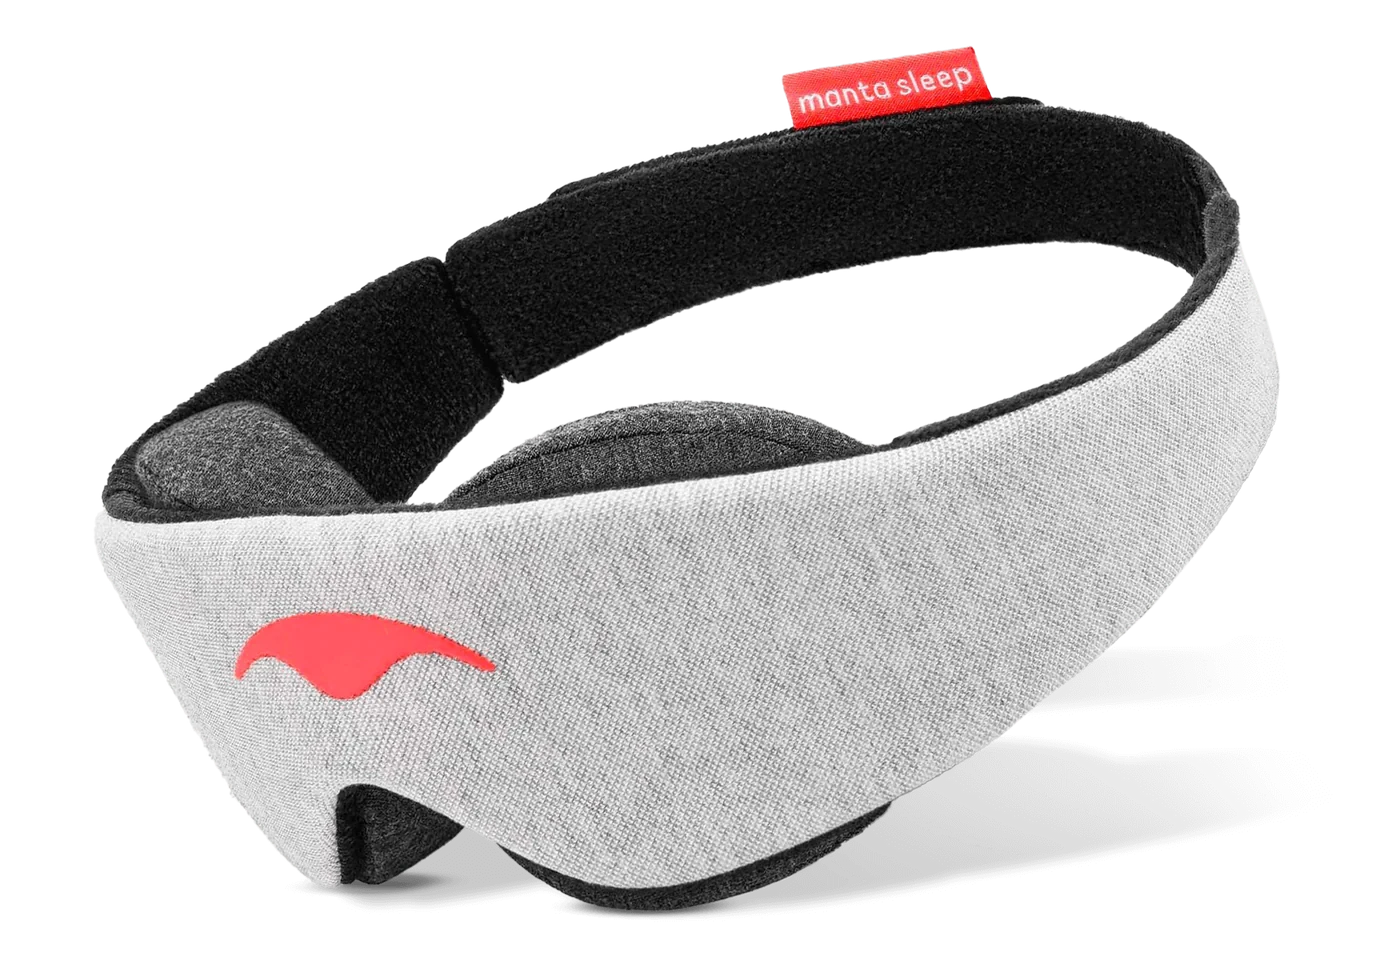 A gray fully adjustable sleep mask with eye cups.